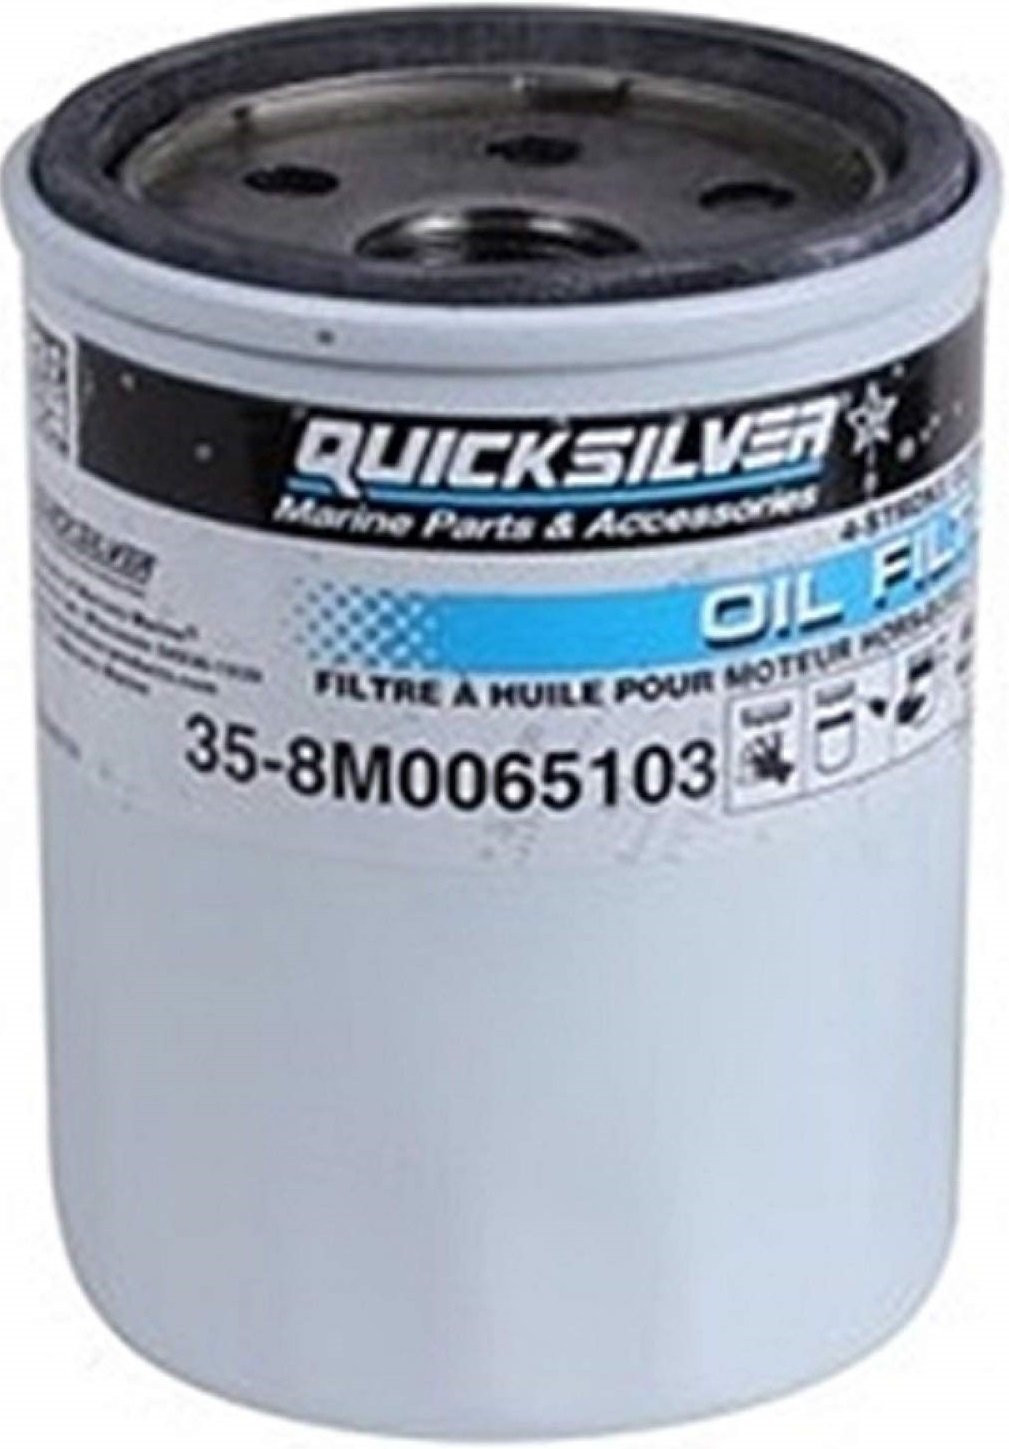 Boat Filters Quicksilver Oil Filter 35-8M0162830